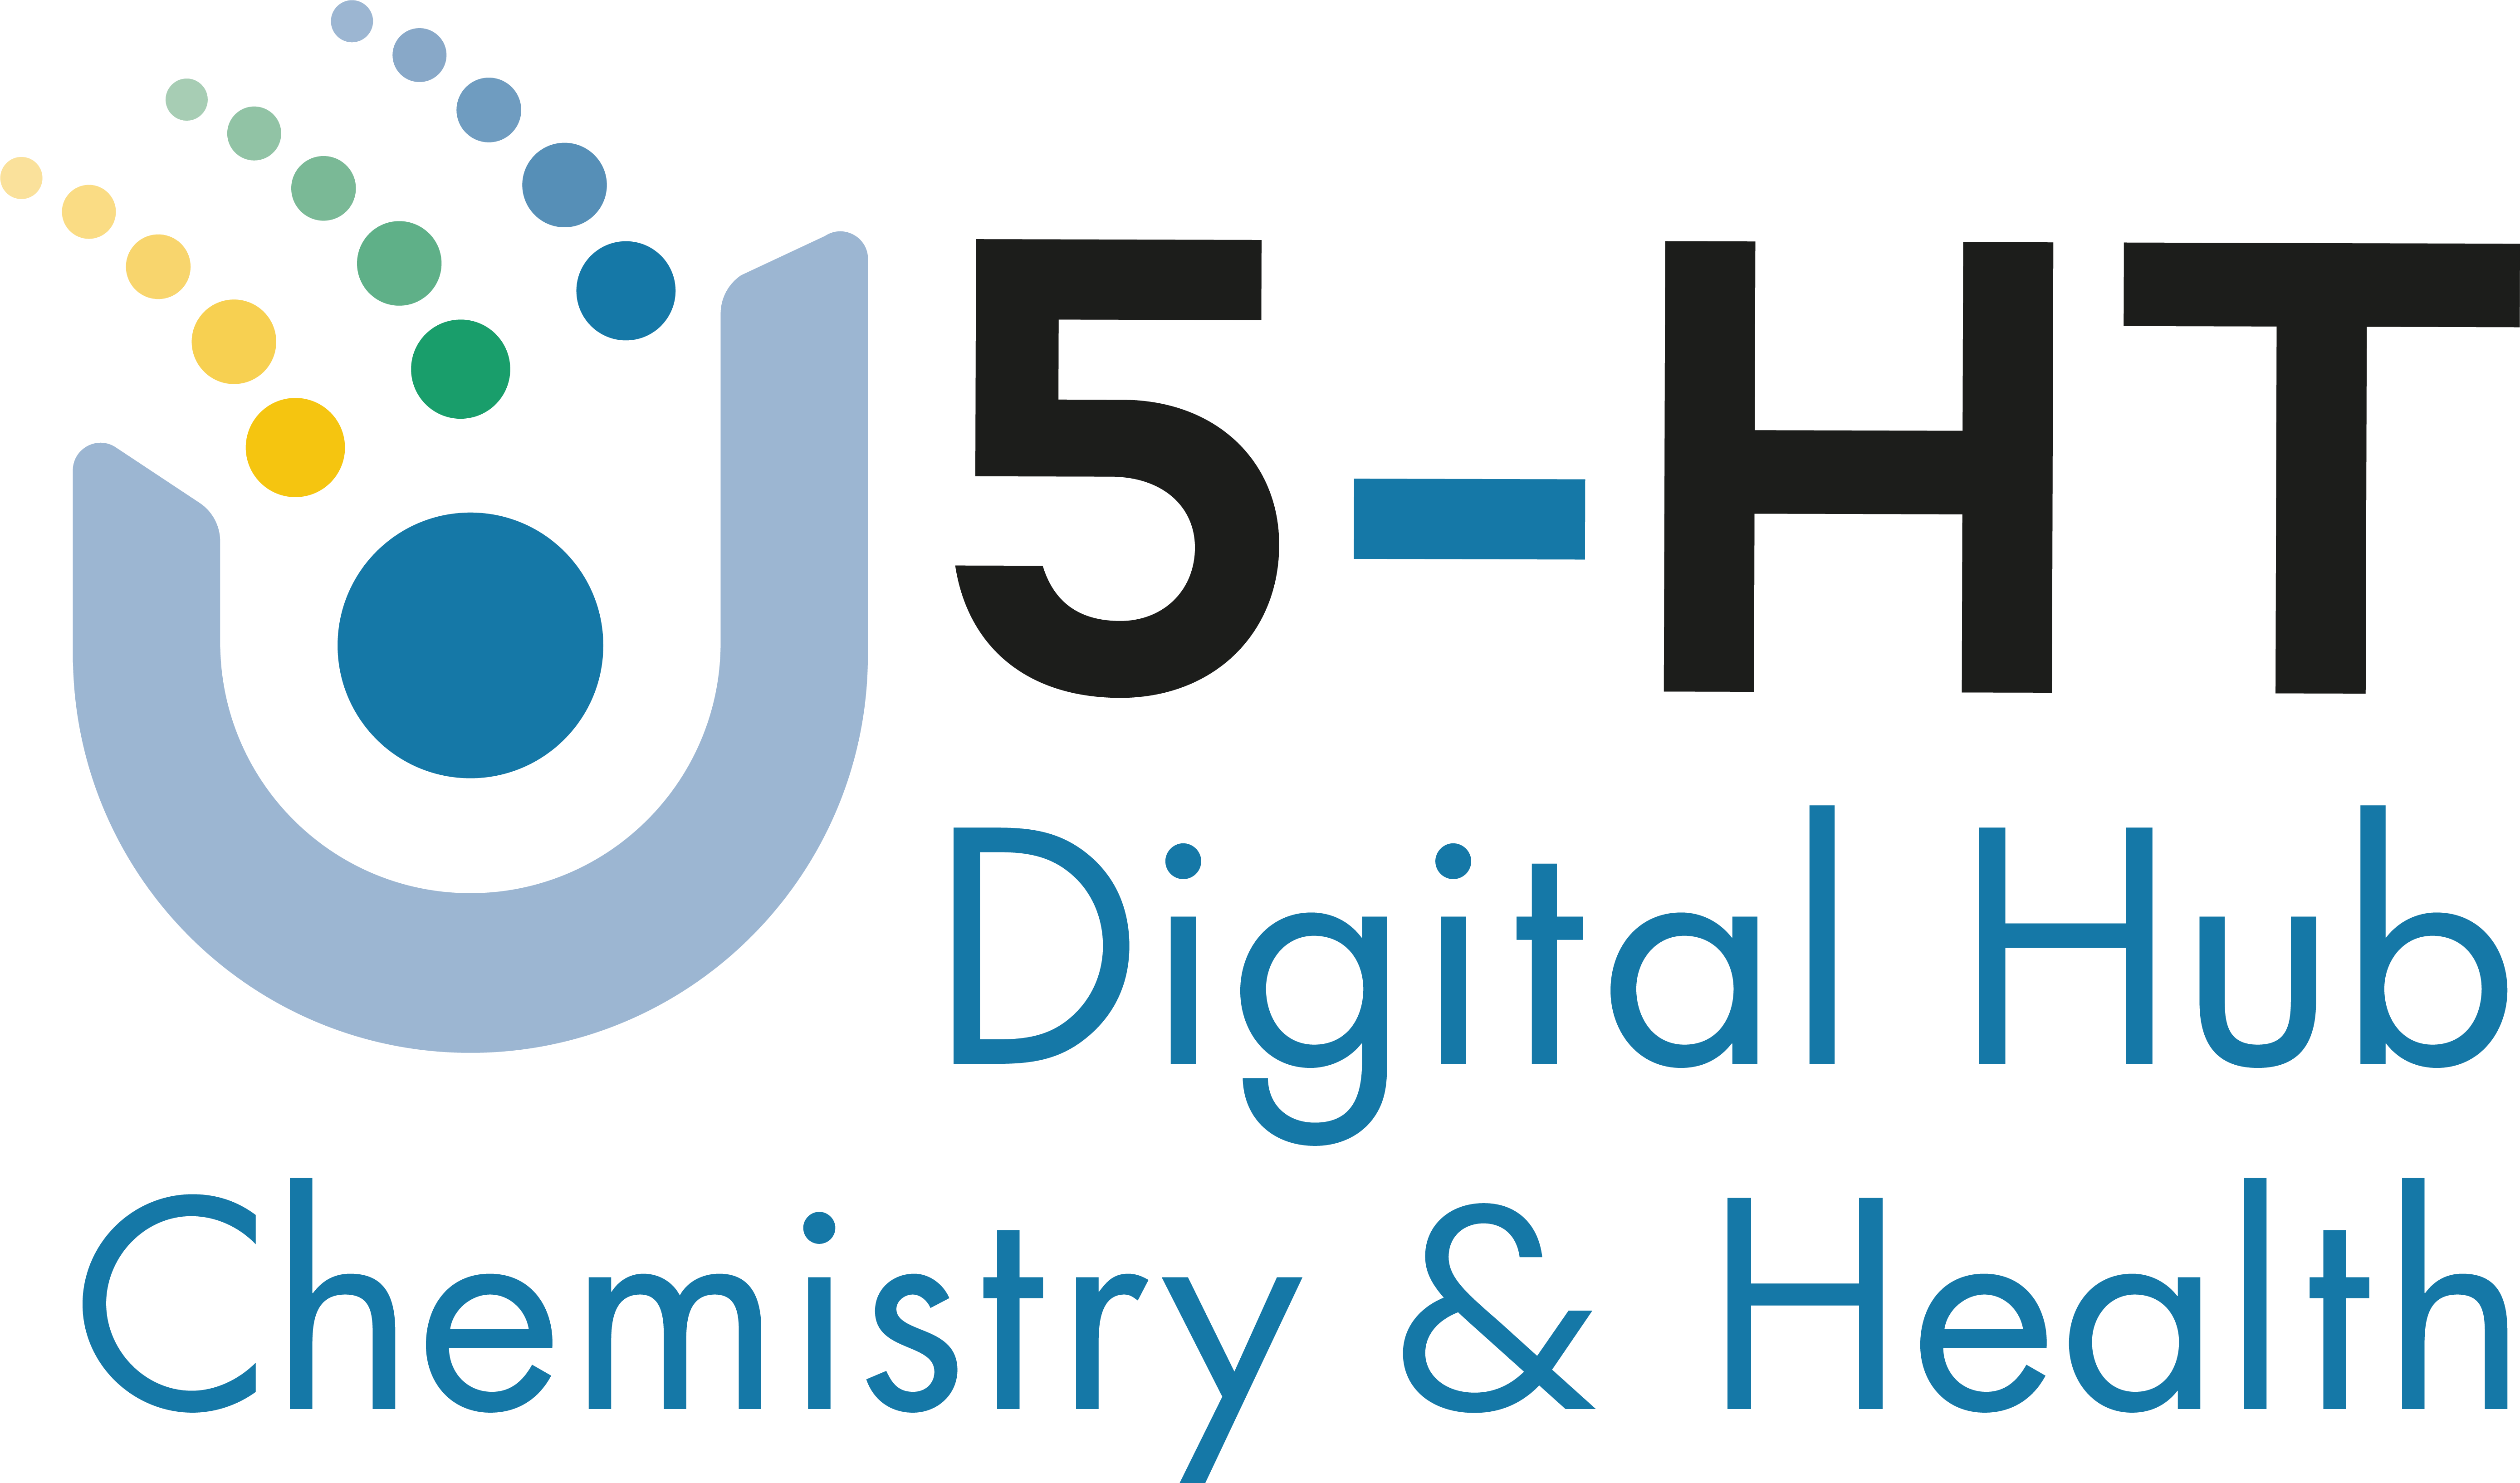 Bionomous will be part of the 5-HT Digital Hub